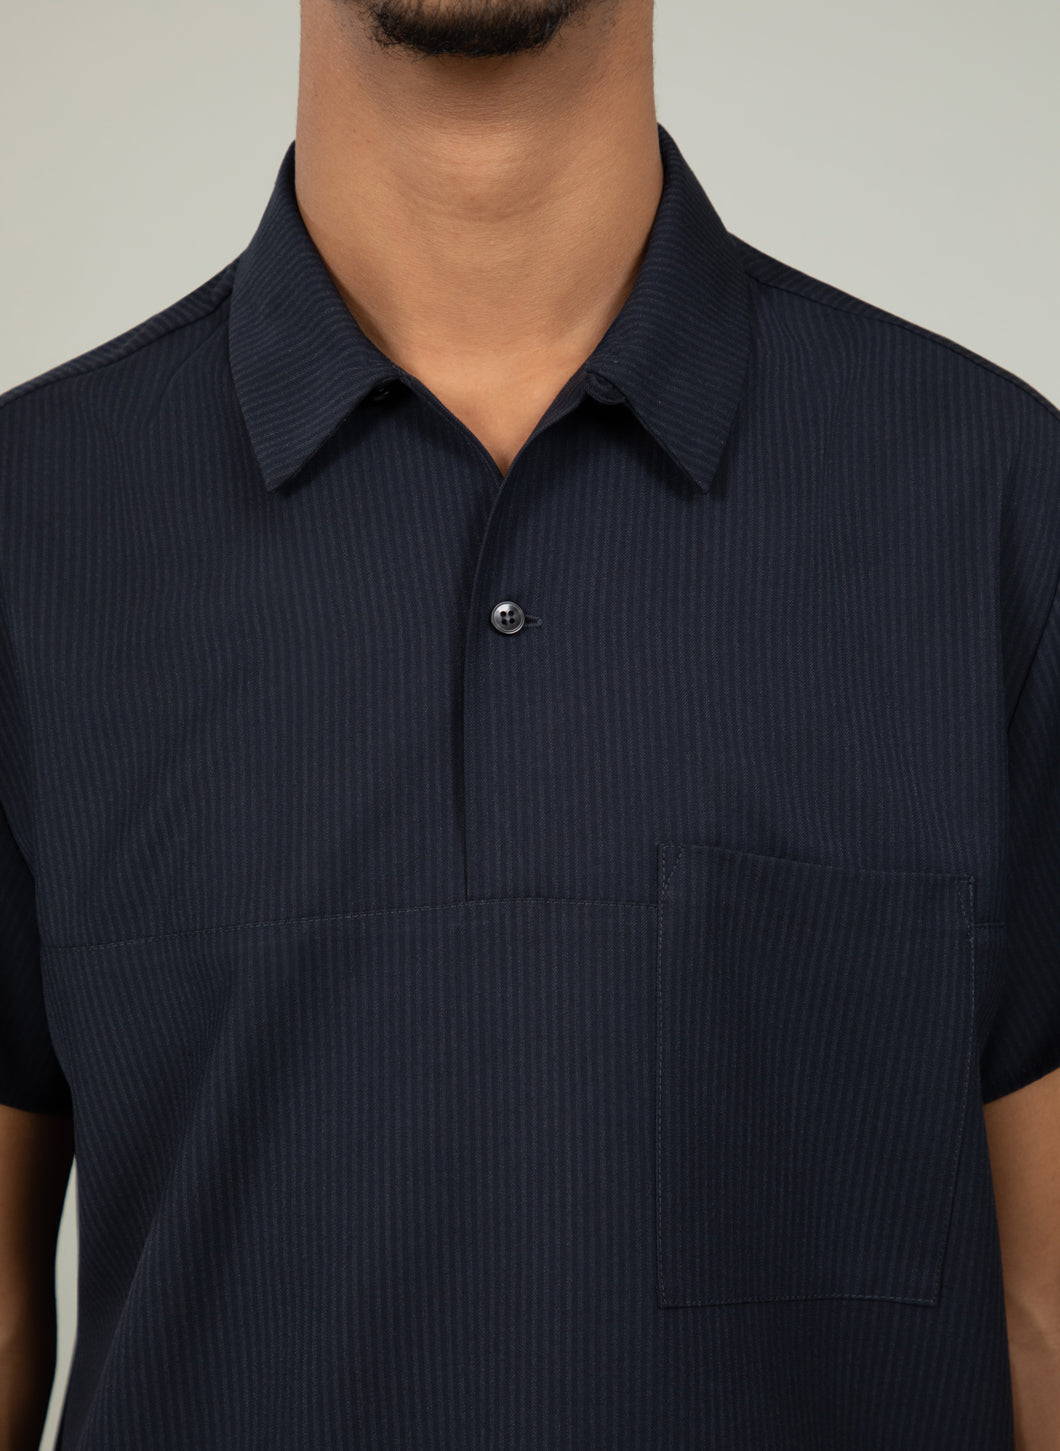 Short Sleeve Poloshirt with Chest Pocket in Navy Fine Stripe Gabardine